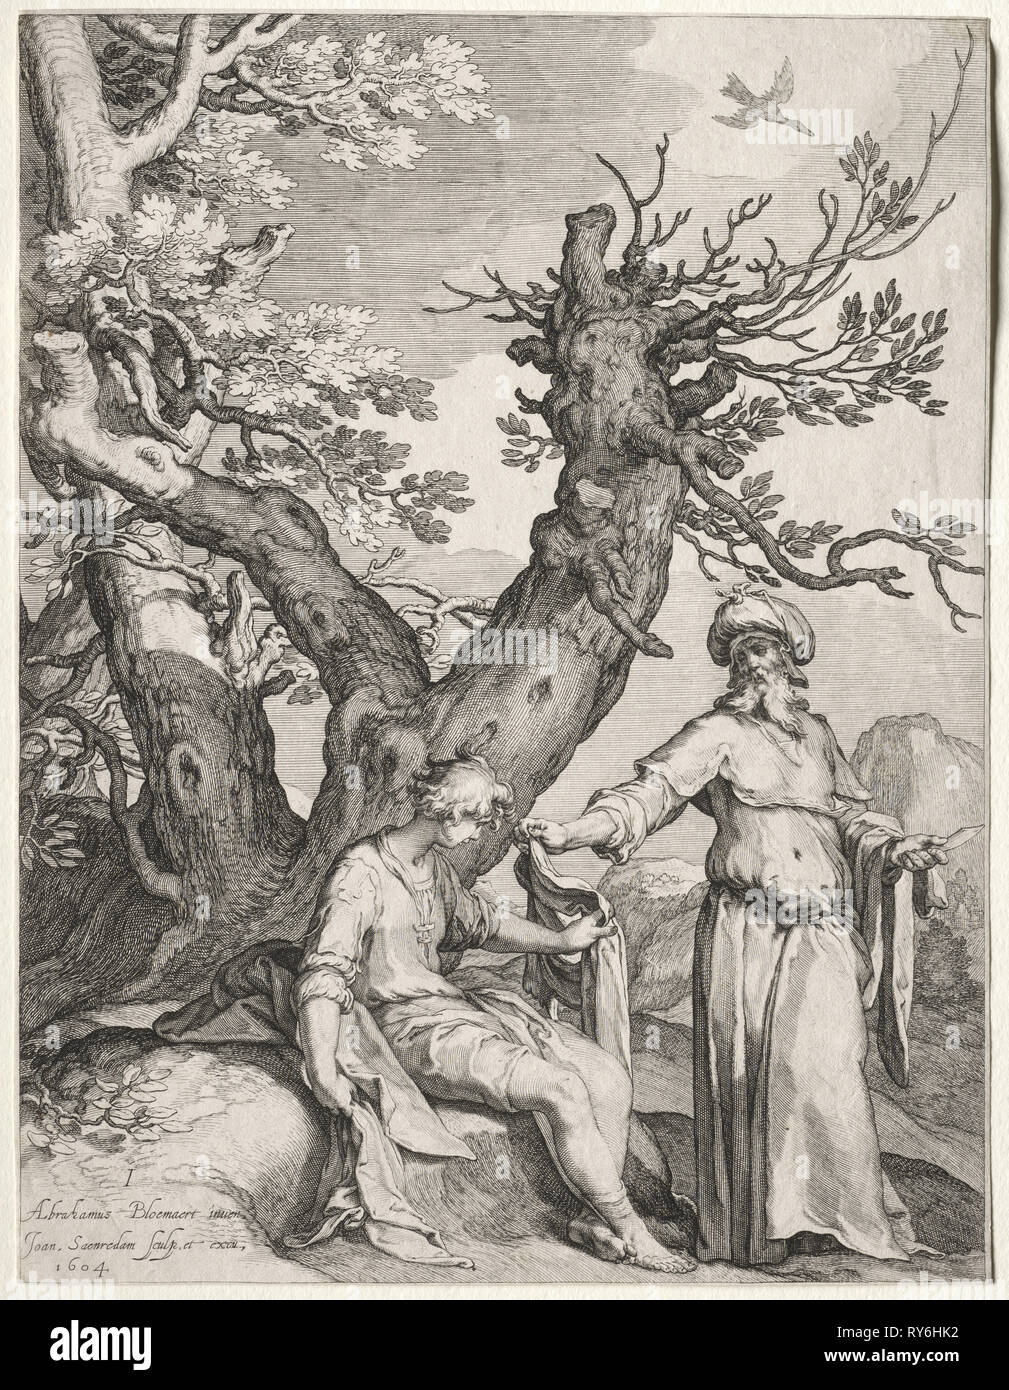 Scenes of the Prophet Ahijah: Ahijah and Jeroboam, 1604. Jan Saenredam (Dutch, 1565-1607), Jan Saenredam (Dutch, 1565-1607), after Abraham Bloemaert (Dutch, 1564-1651). Engraving; sheet: 25.5 x 19.5 cm (10 1/16 x 7 11/16 in Stock Photo